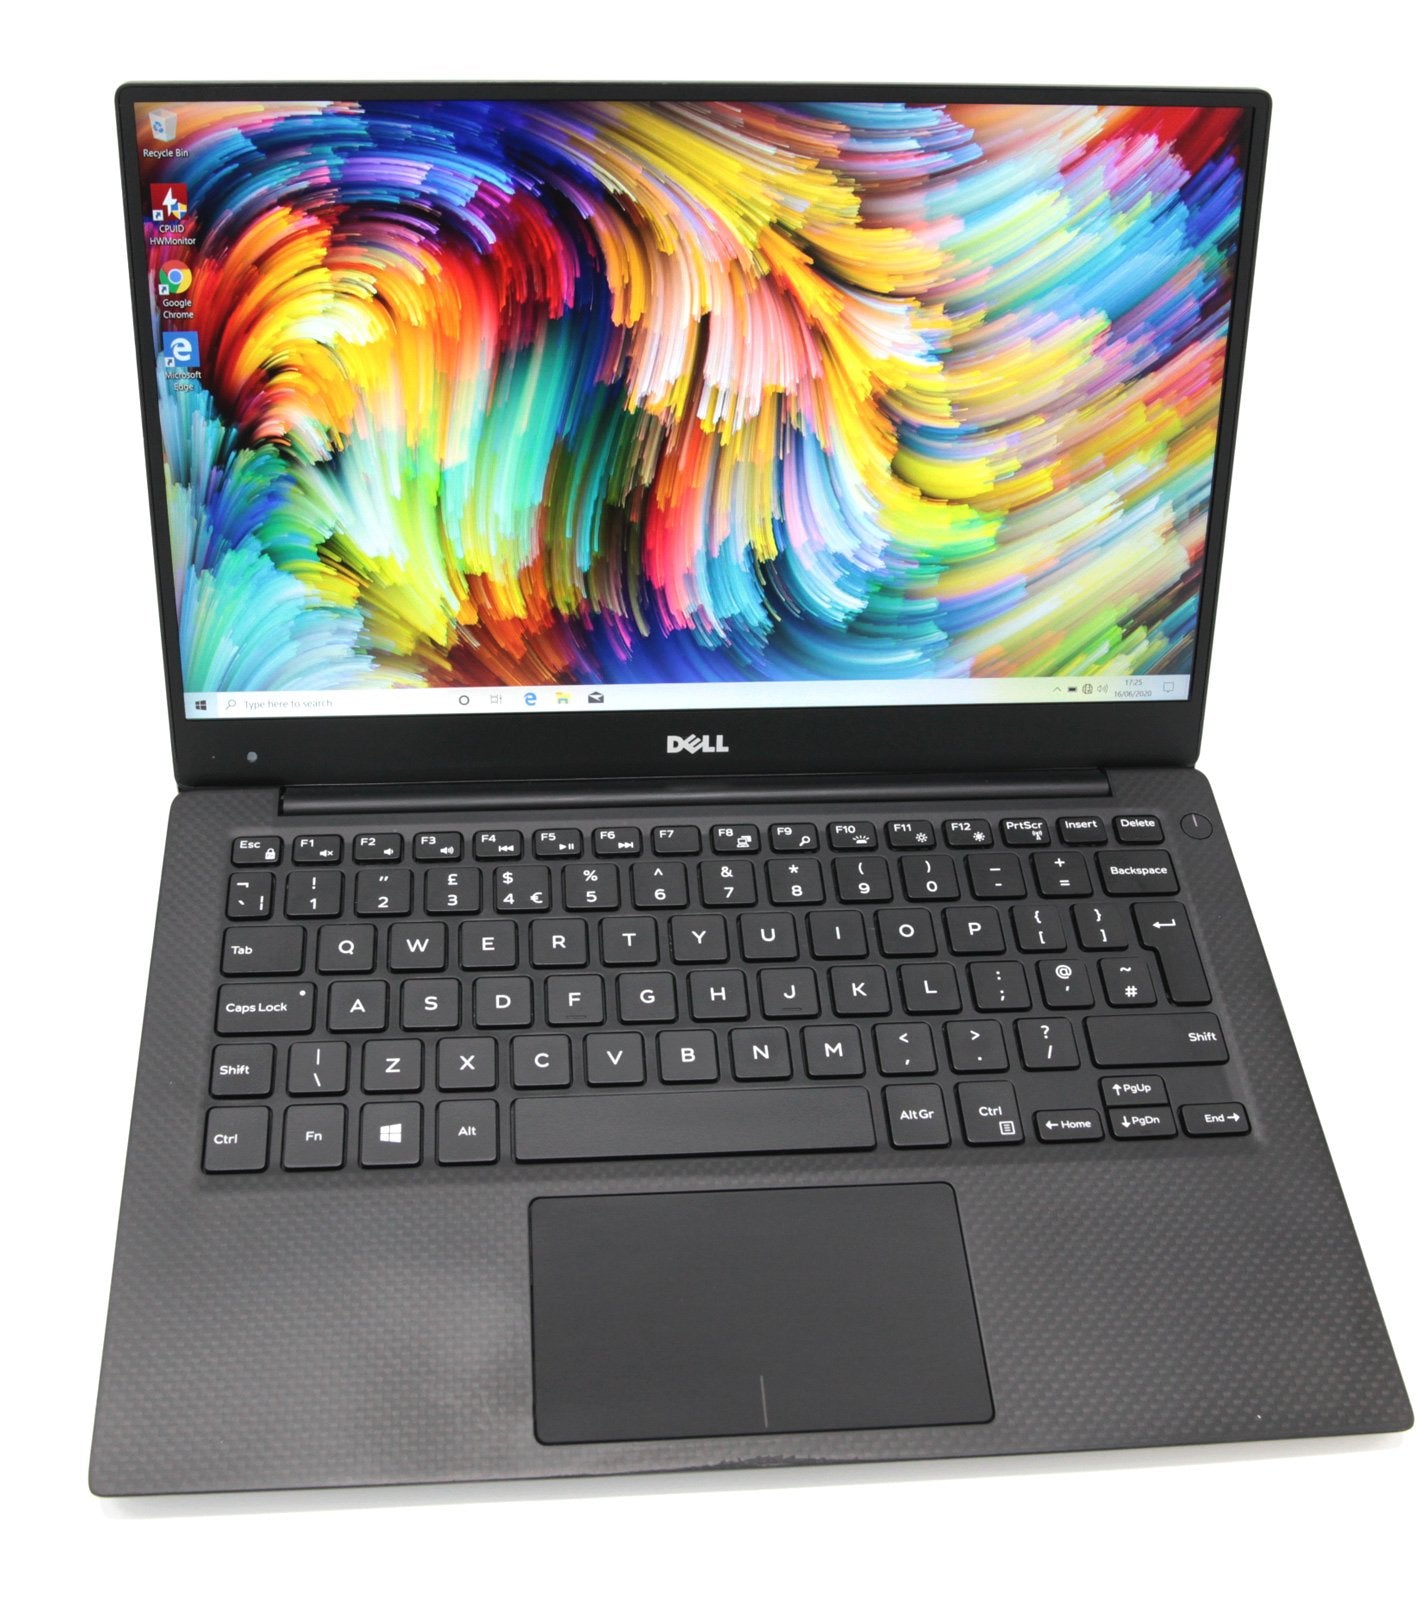 Dell XPS 13 9350 Laptop: 13.3" FHD Display, Core i7-6560U, 256GB, 8GB RAM - CruiseTech